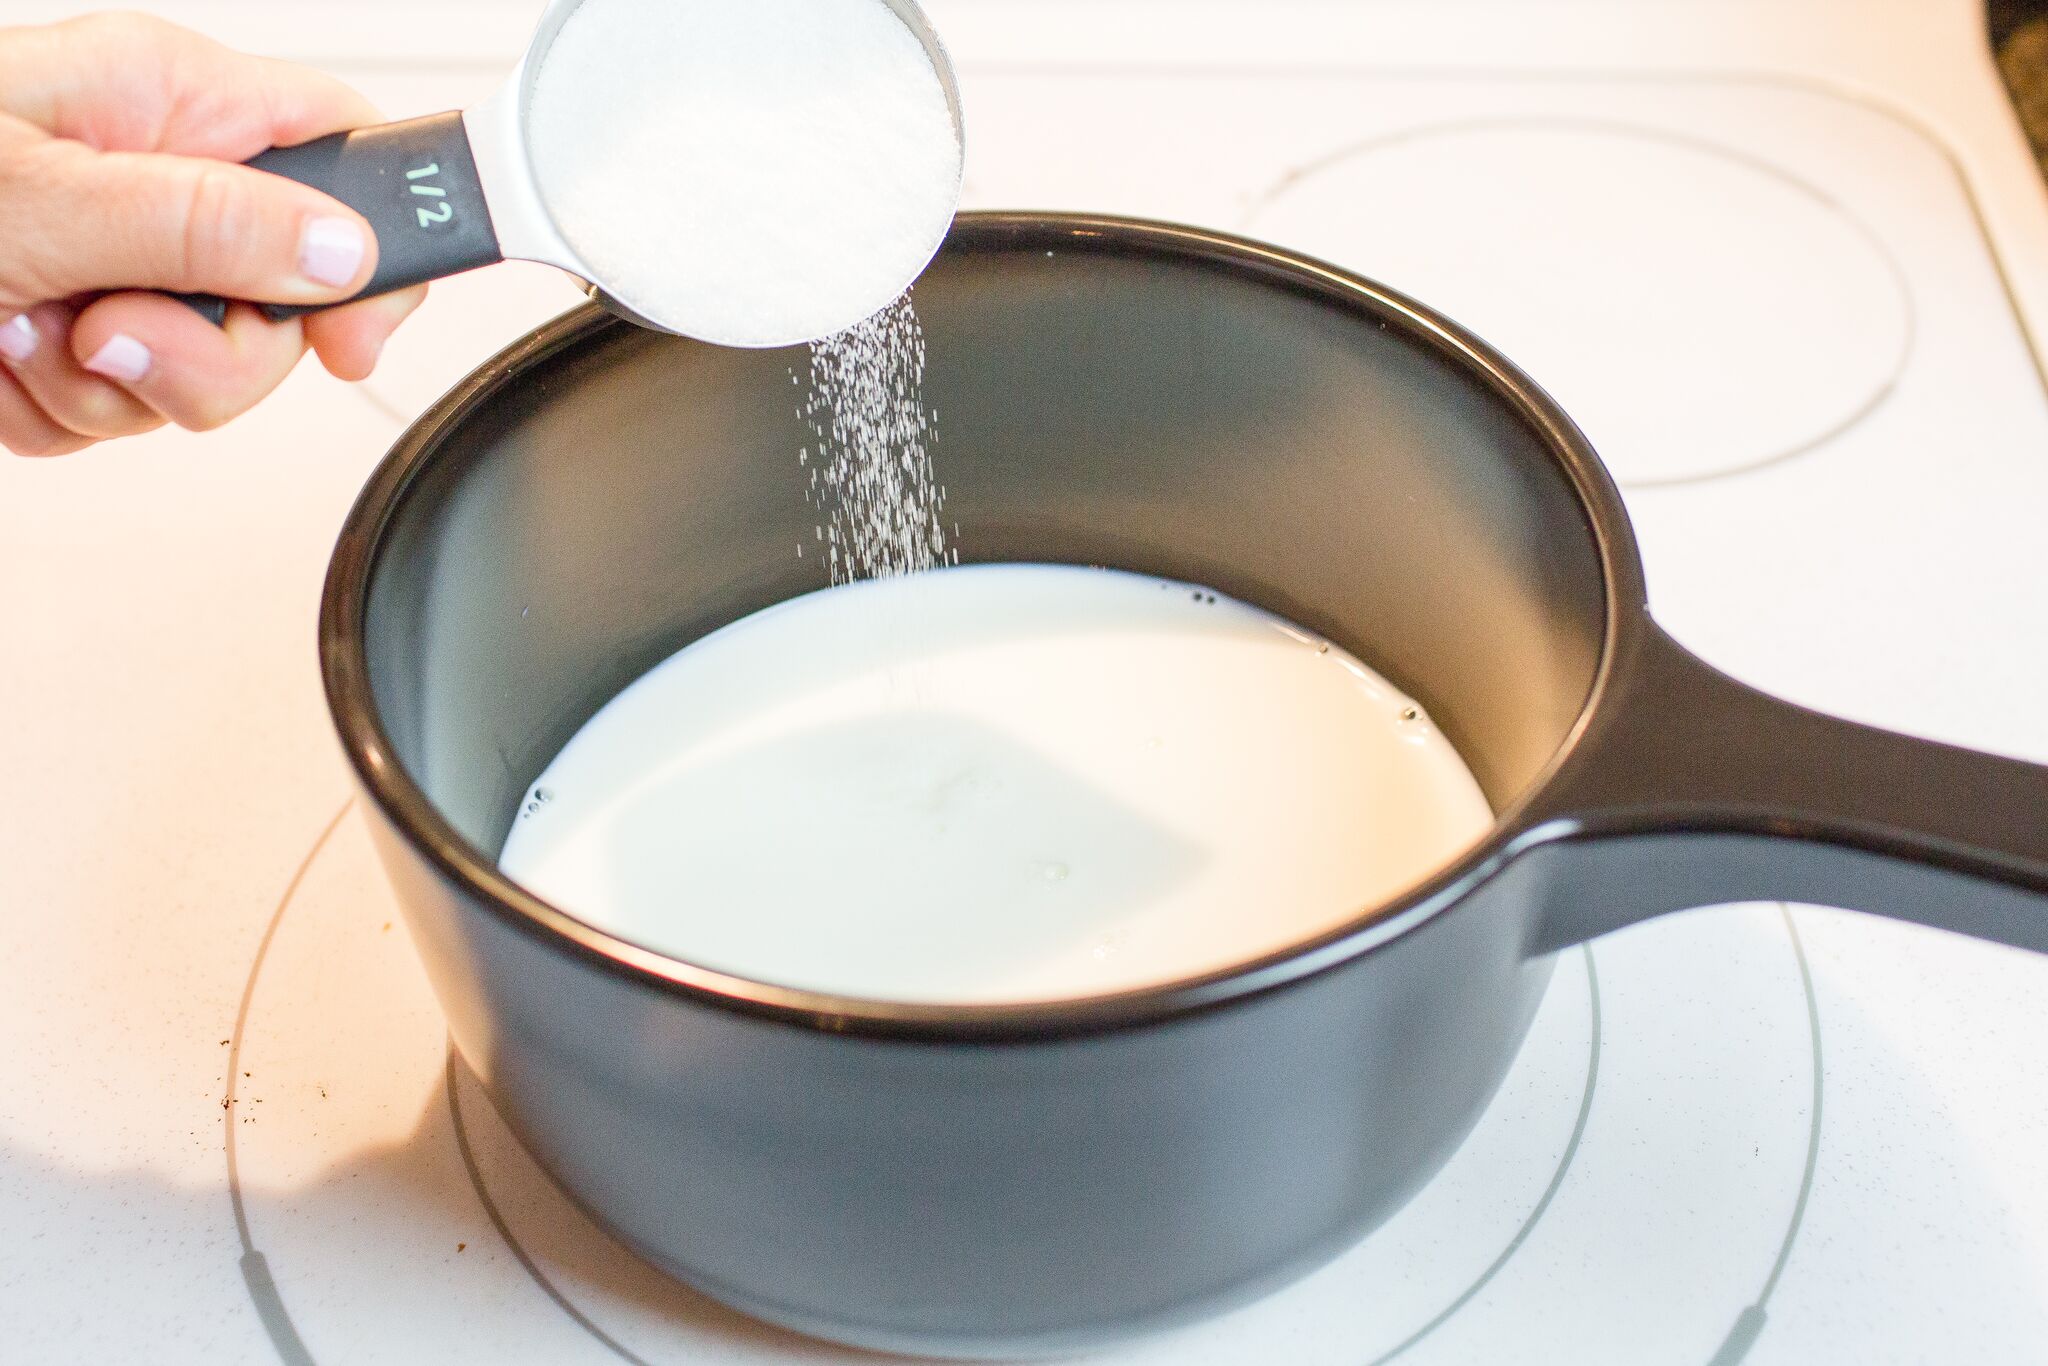 Add sugar to the warm milk